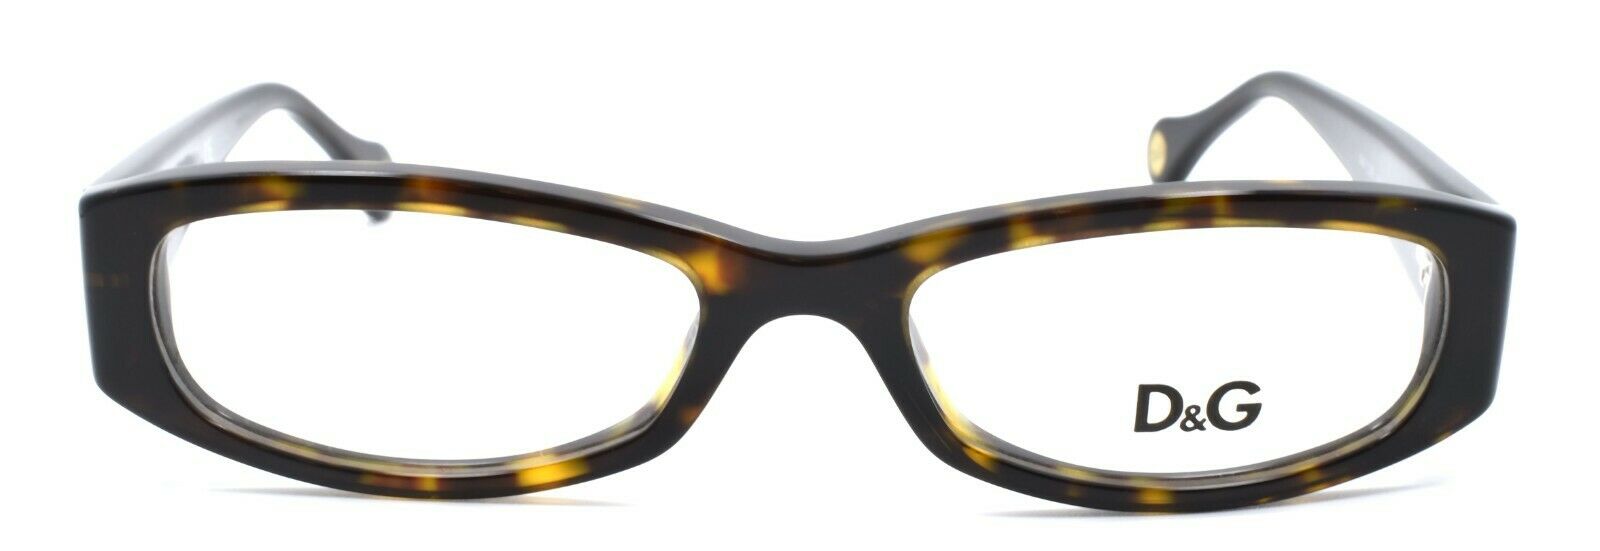 2-Dolce & Gabbana D&G 1228 502 Women's Eyeglasses Frames Petite 48-16-135 Havana-679420460963-IKSpecs